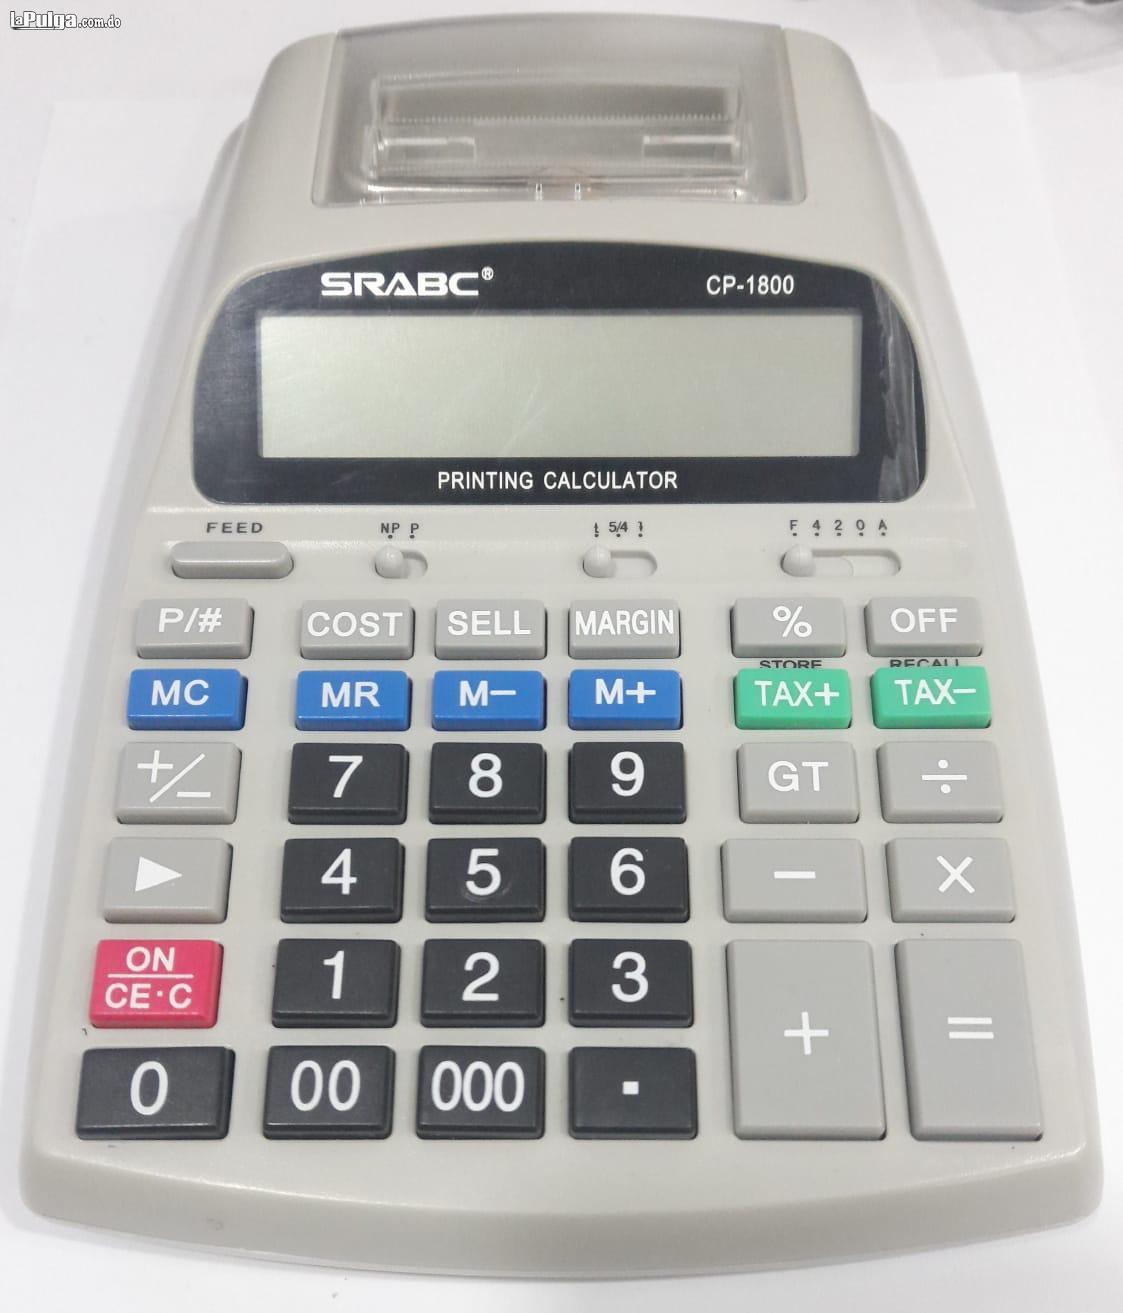 Calculadora impresora SRABC con papel profesional calculo digito Tax Foto 7097470-1.jpg